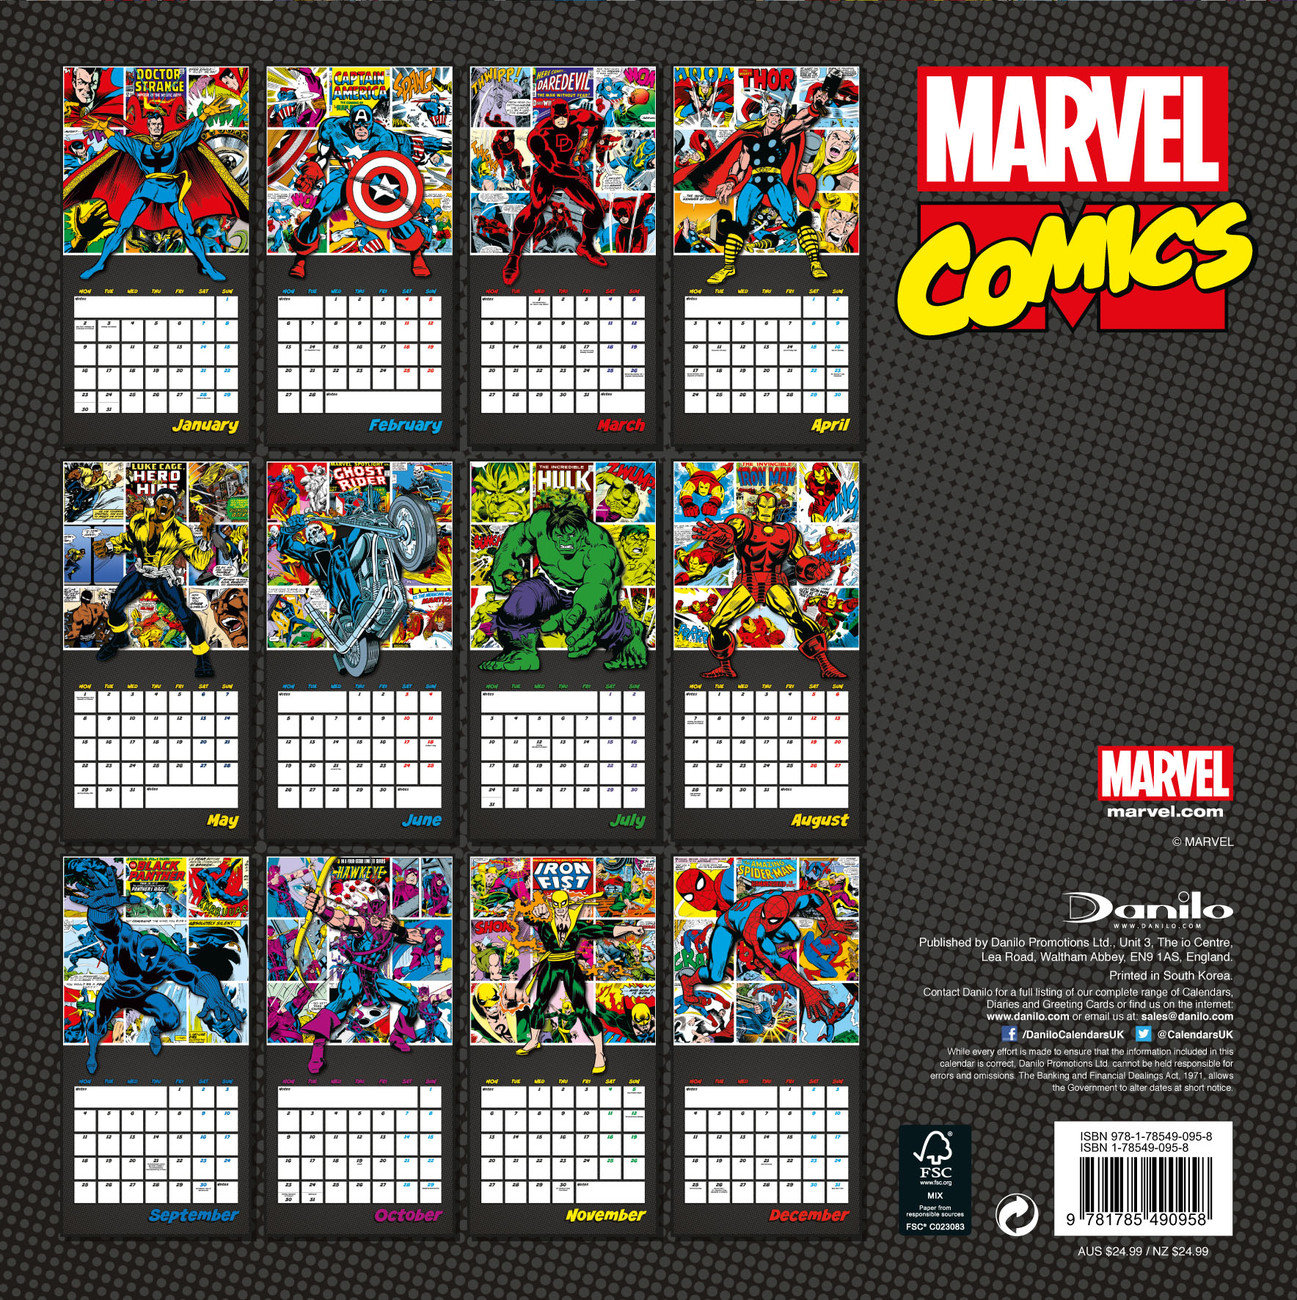 Marvel comics Wandkalender 2017 Kaufen bei Europosters